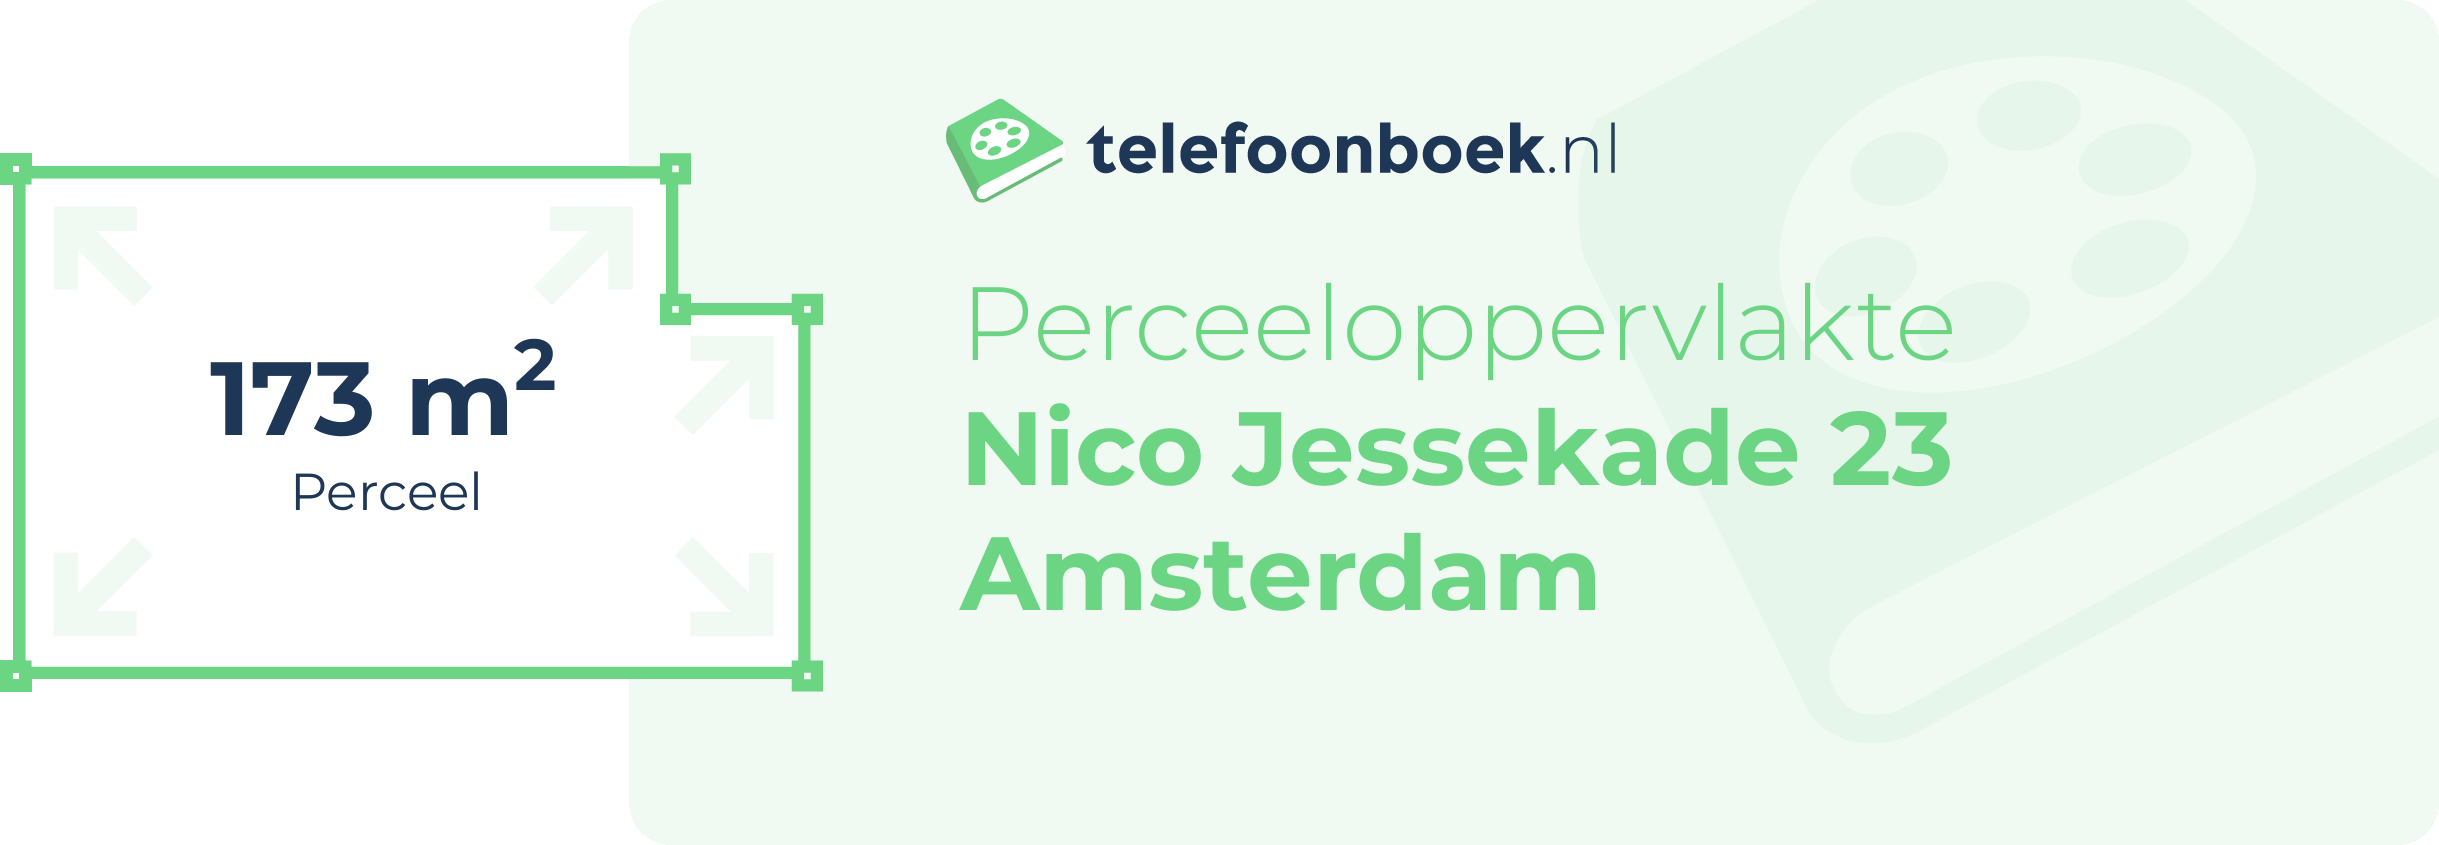 Perceeloppervlakte Nico Jessekade 23 Amsterdam